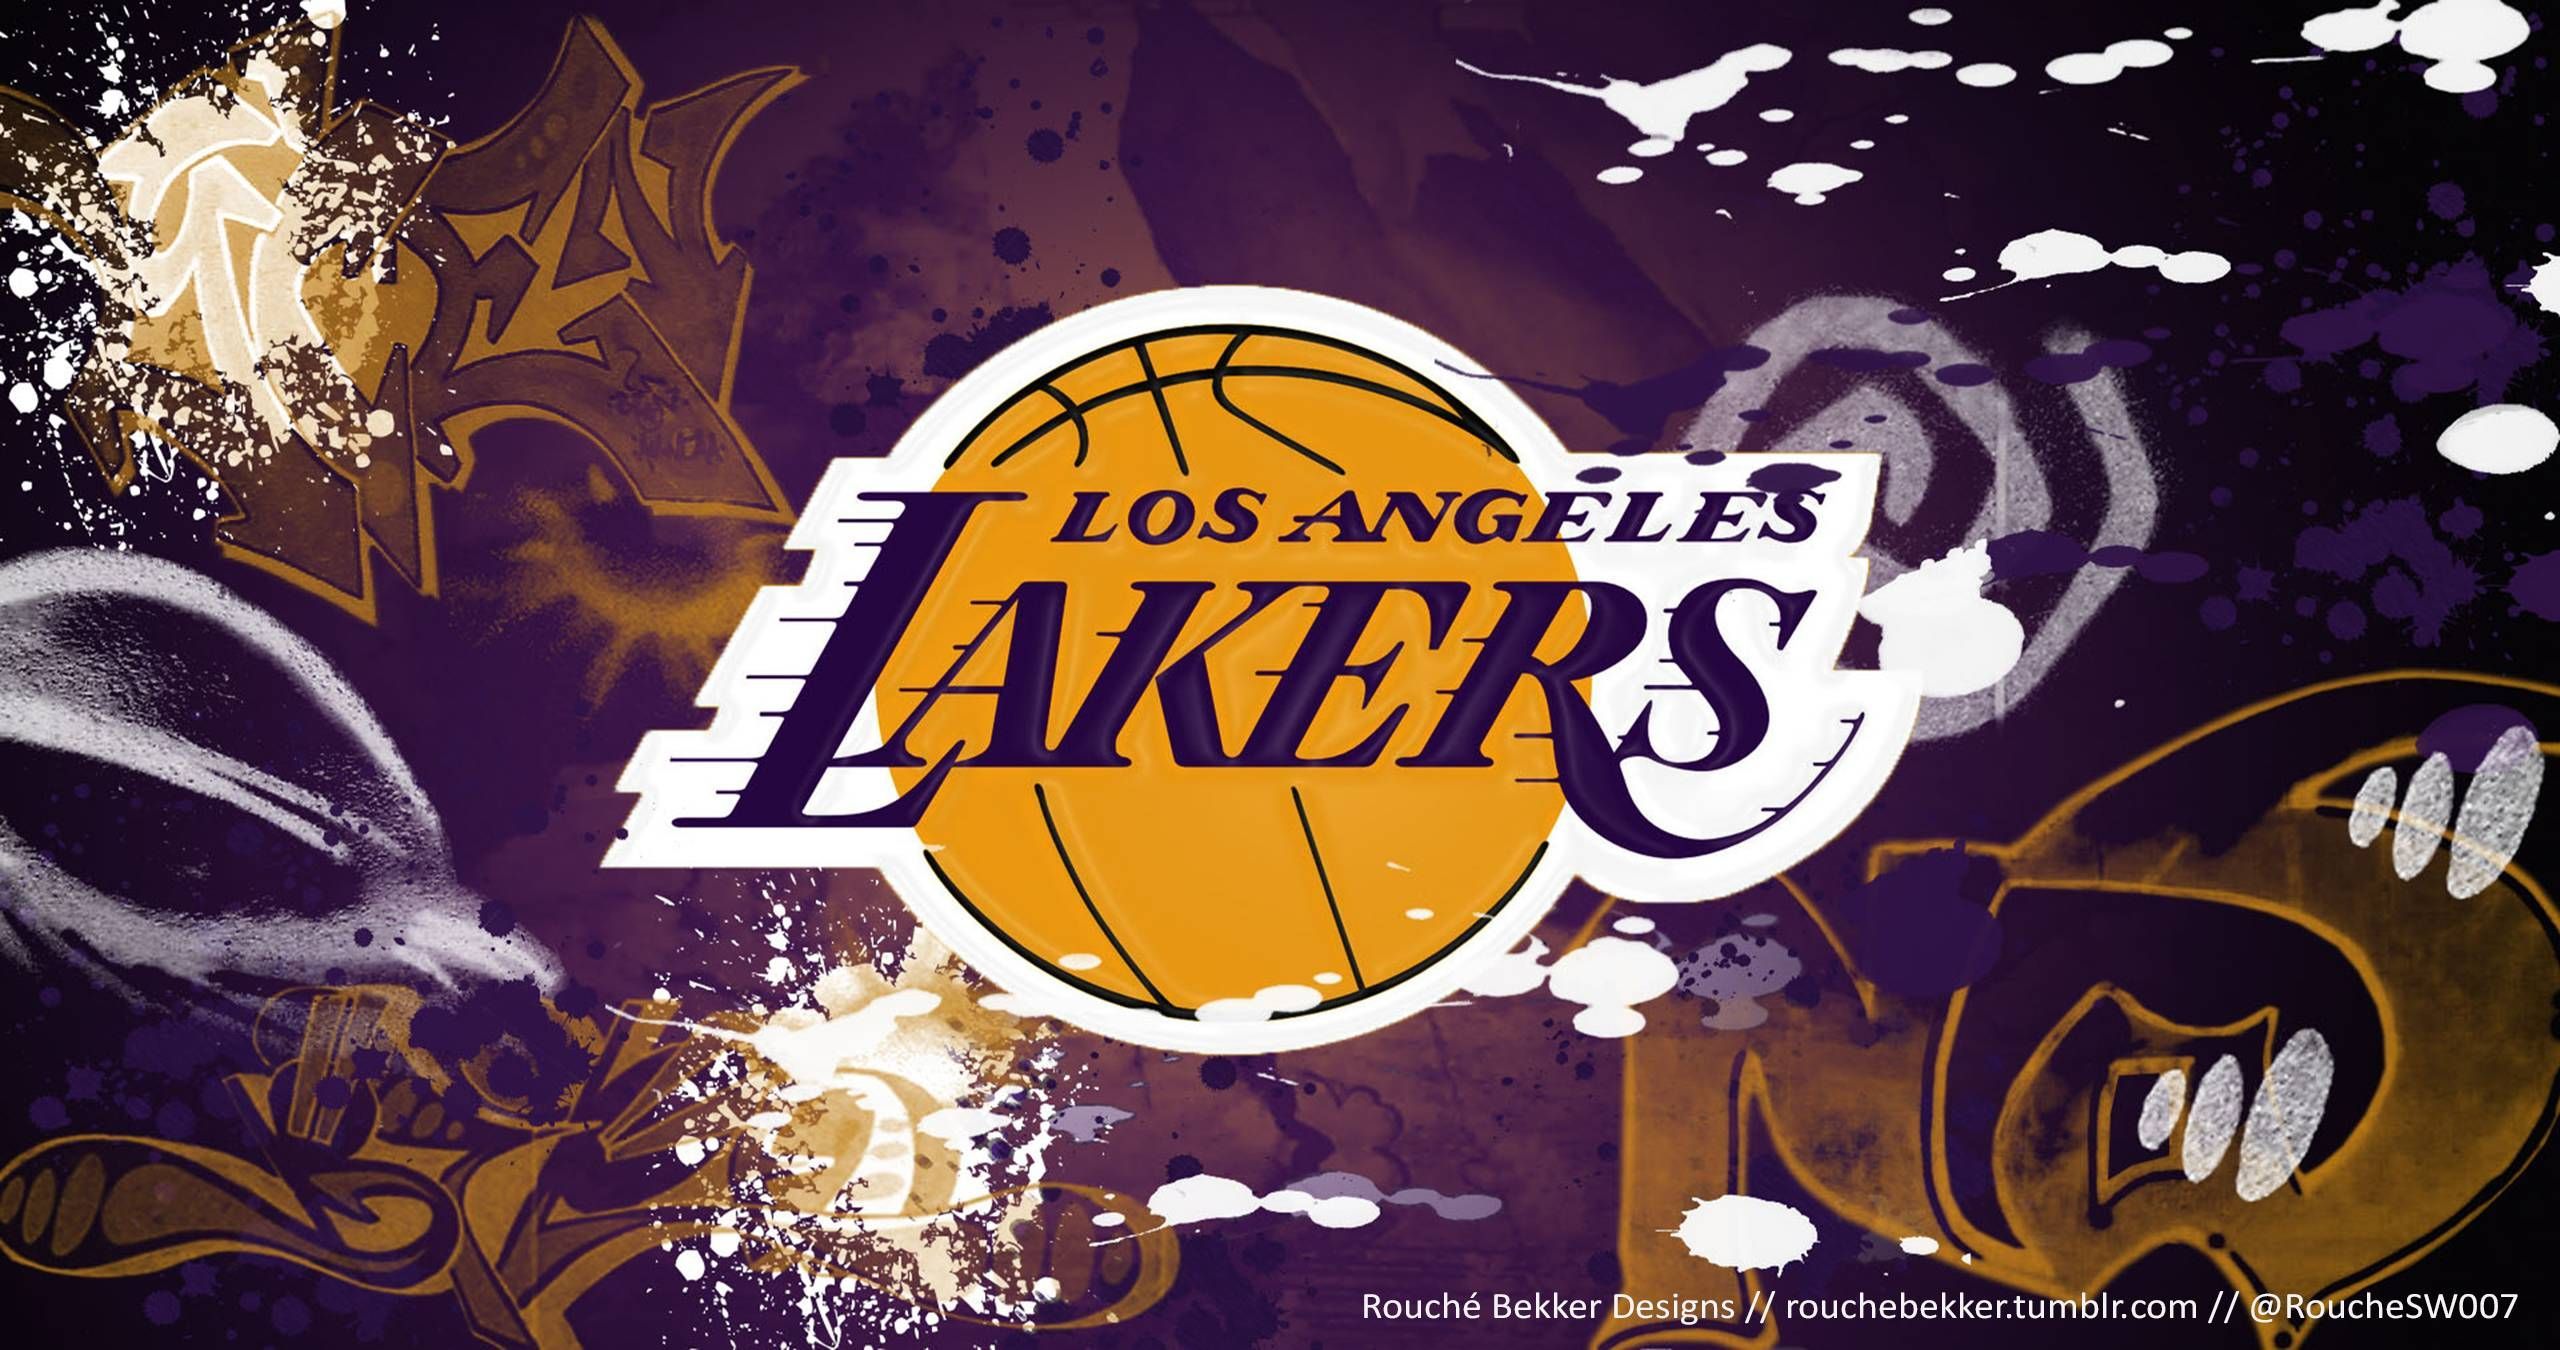 Lakers wallpaper, lakers logo wallpaper on shining blue Sports 2560×1350 LA Lakers Wallpaper HD 42. Lakers wallpaper, Los angeles lakers, Kobe bryant wallpaper